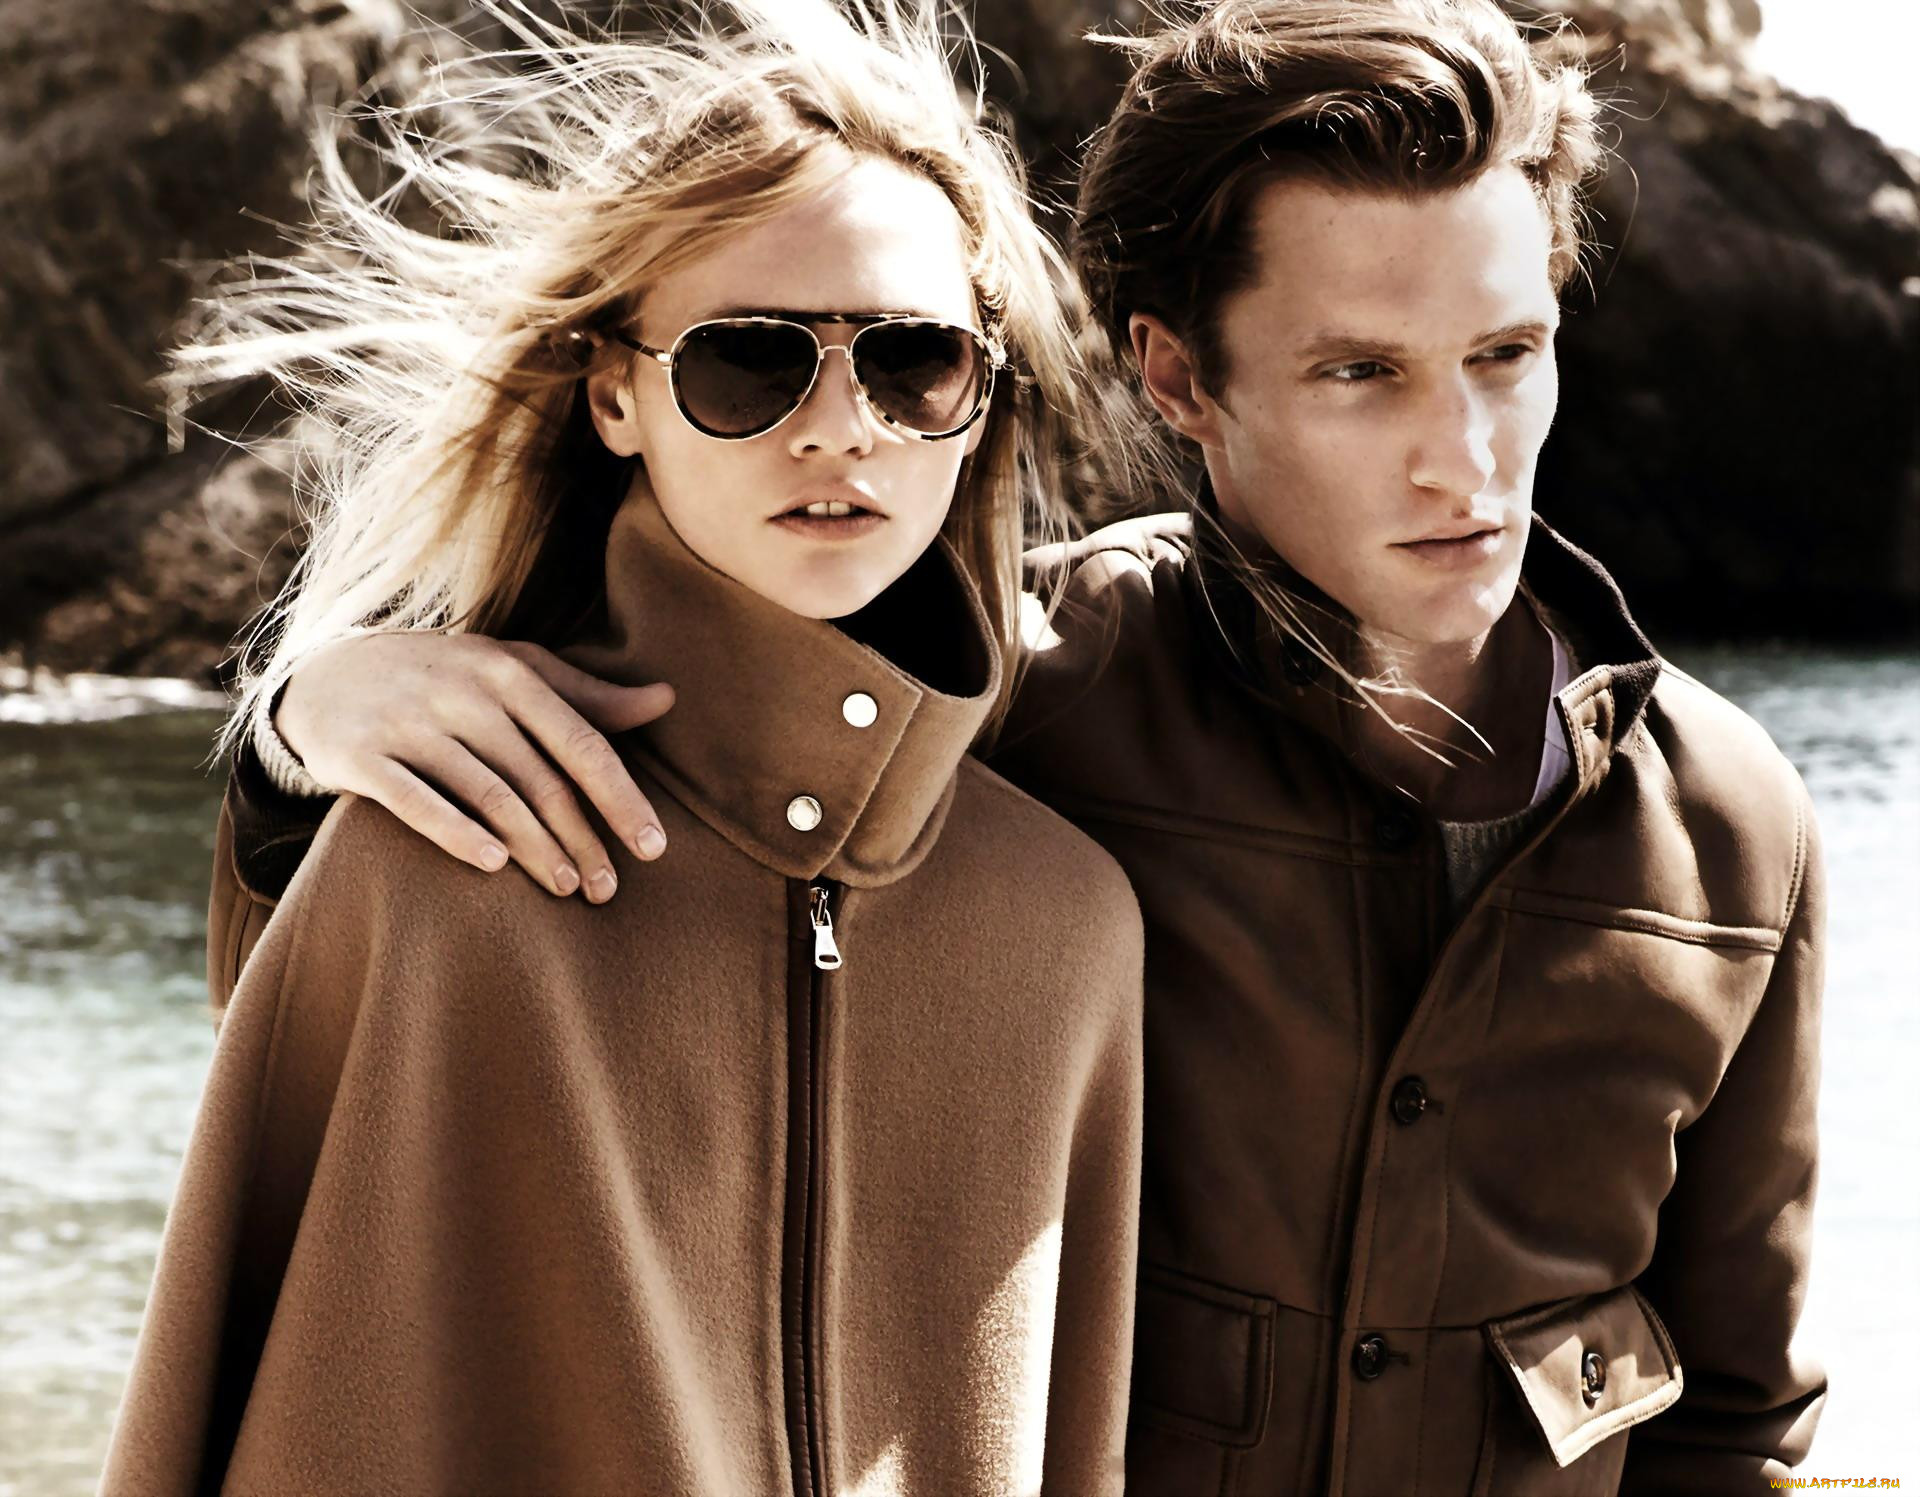 Massimo dutti spain. Мужчина и женщина в пальто. Мужчина в пальто с девушкой. Мужская и женская одежда. Очки с пальто.